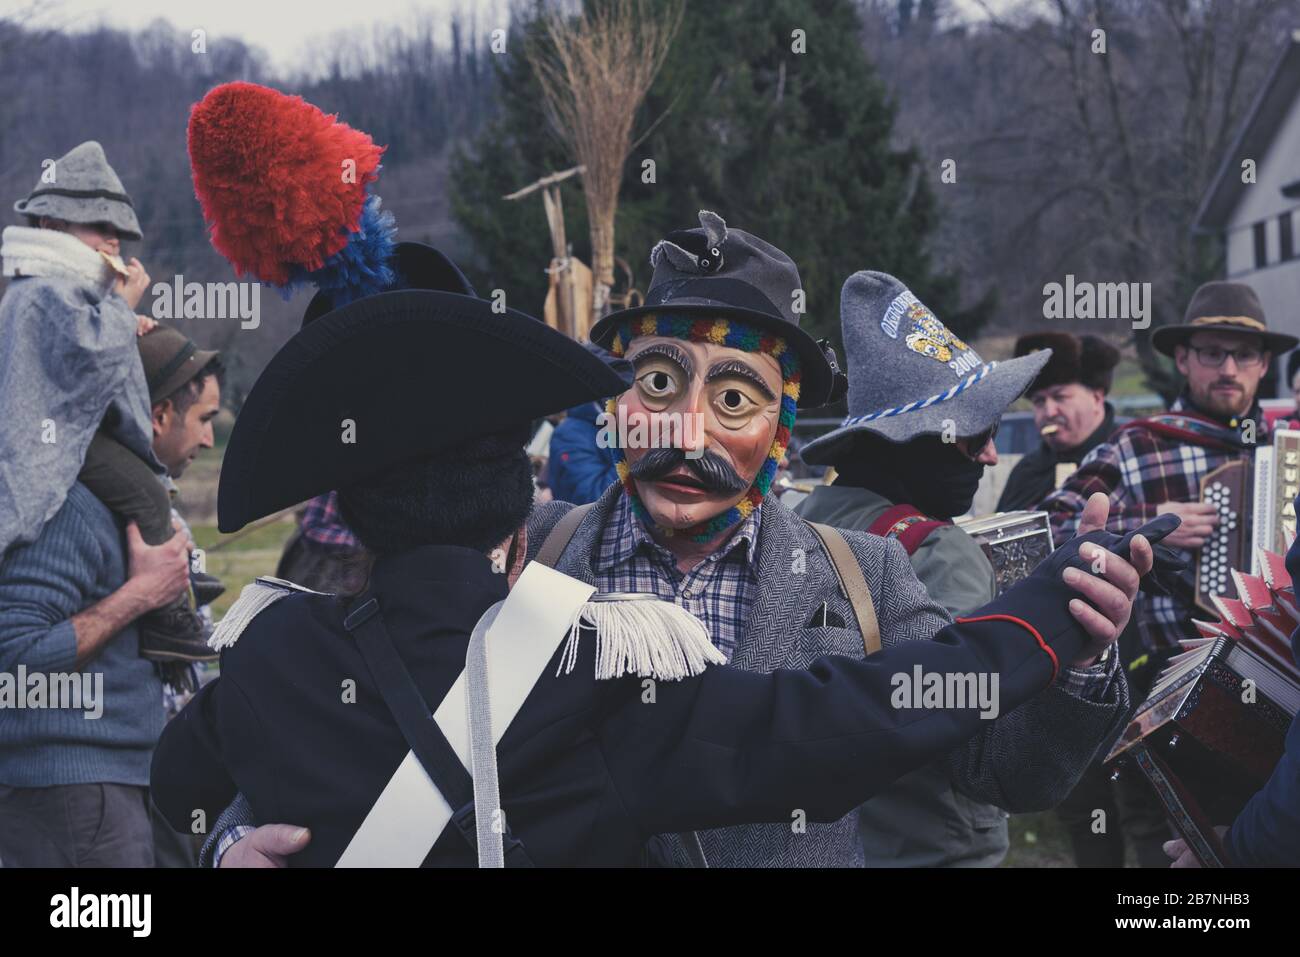 Dos hombres enmascarados bailando con una banda tradicional de fondo. Concepto de música folk. Desfile de carnaval de Pust. Foto de stock